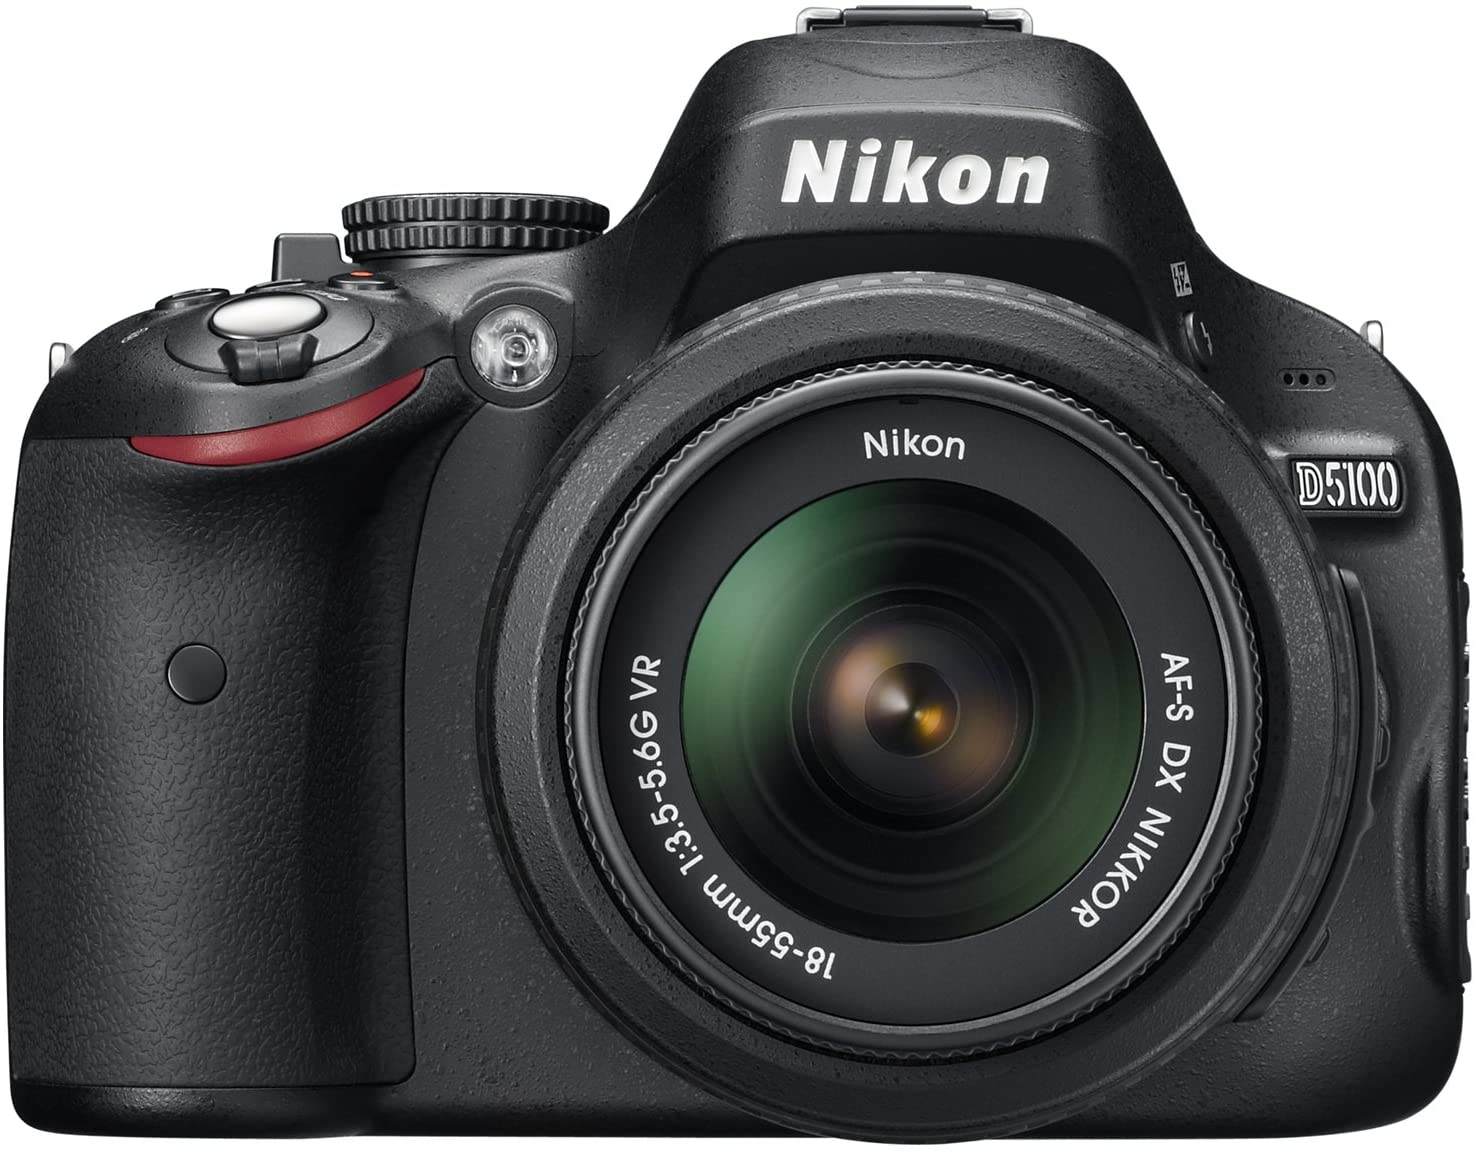 Nikon D5100 black friday